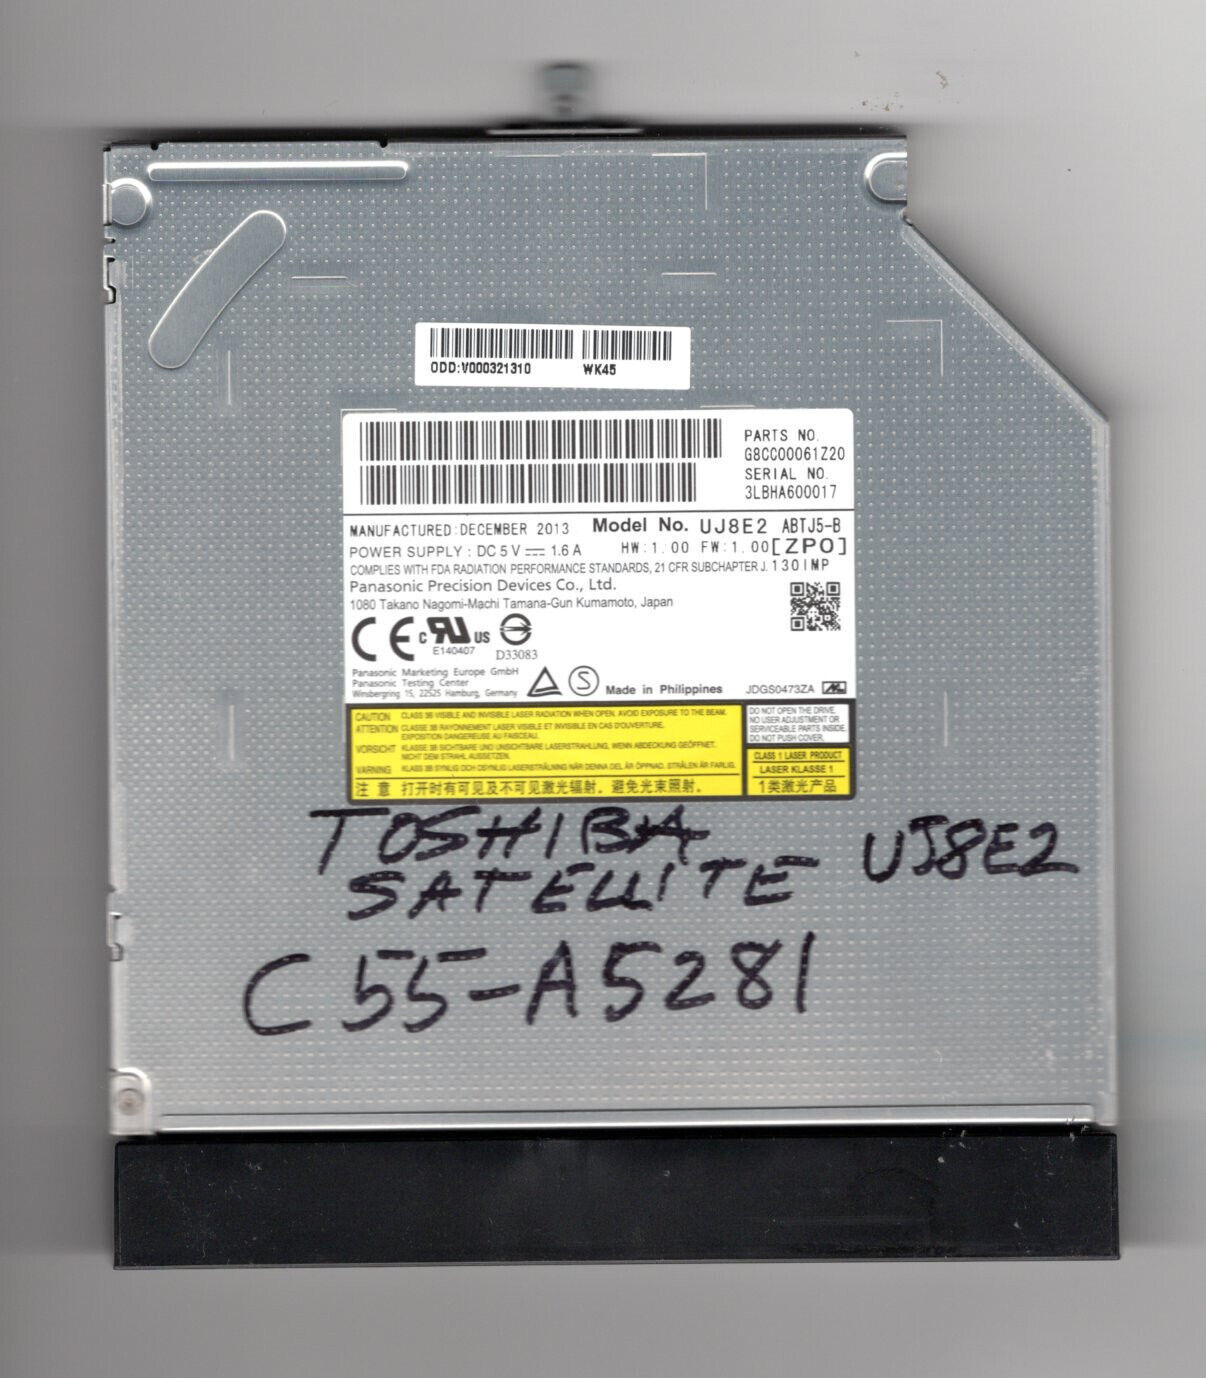 Toshiba Satellite C55-A5281 DVD-RW Black Model UJ-8E2 - $20.00